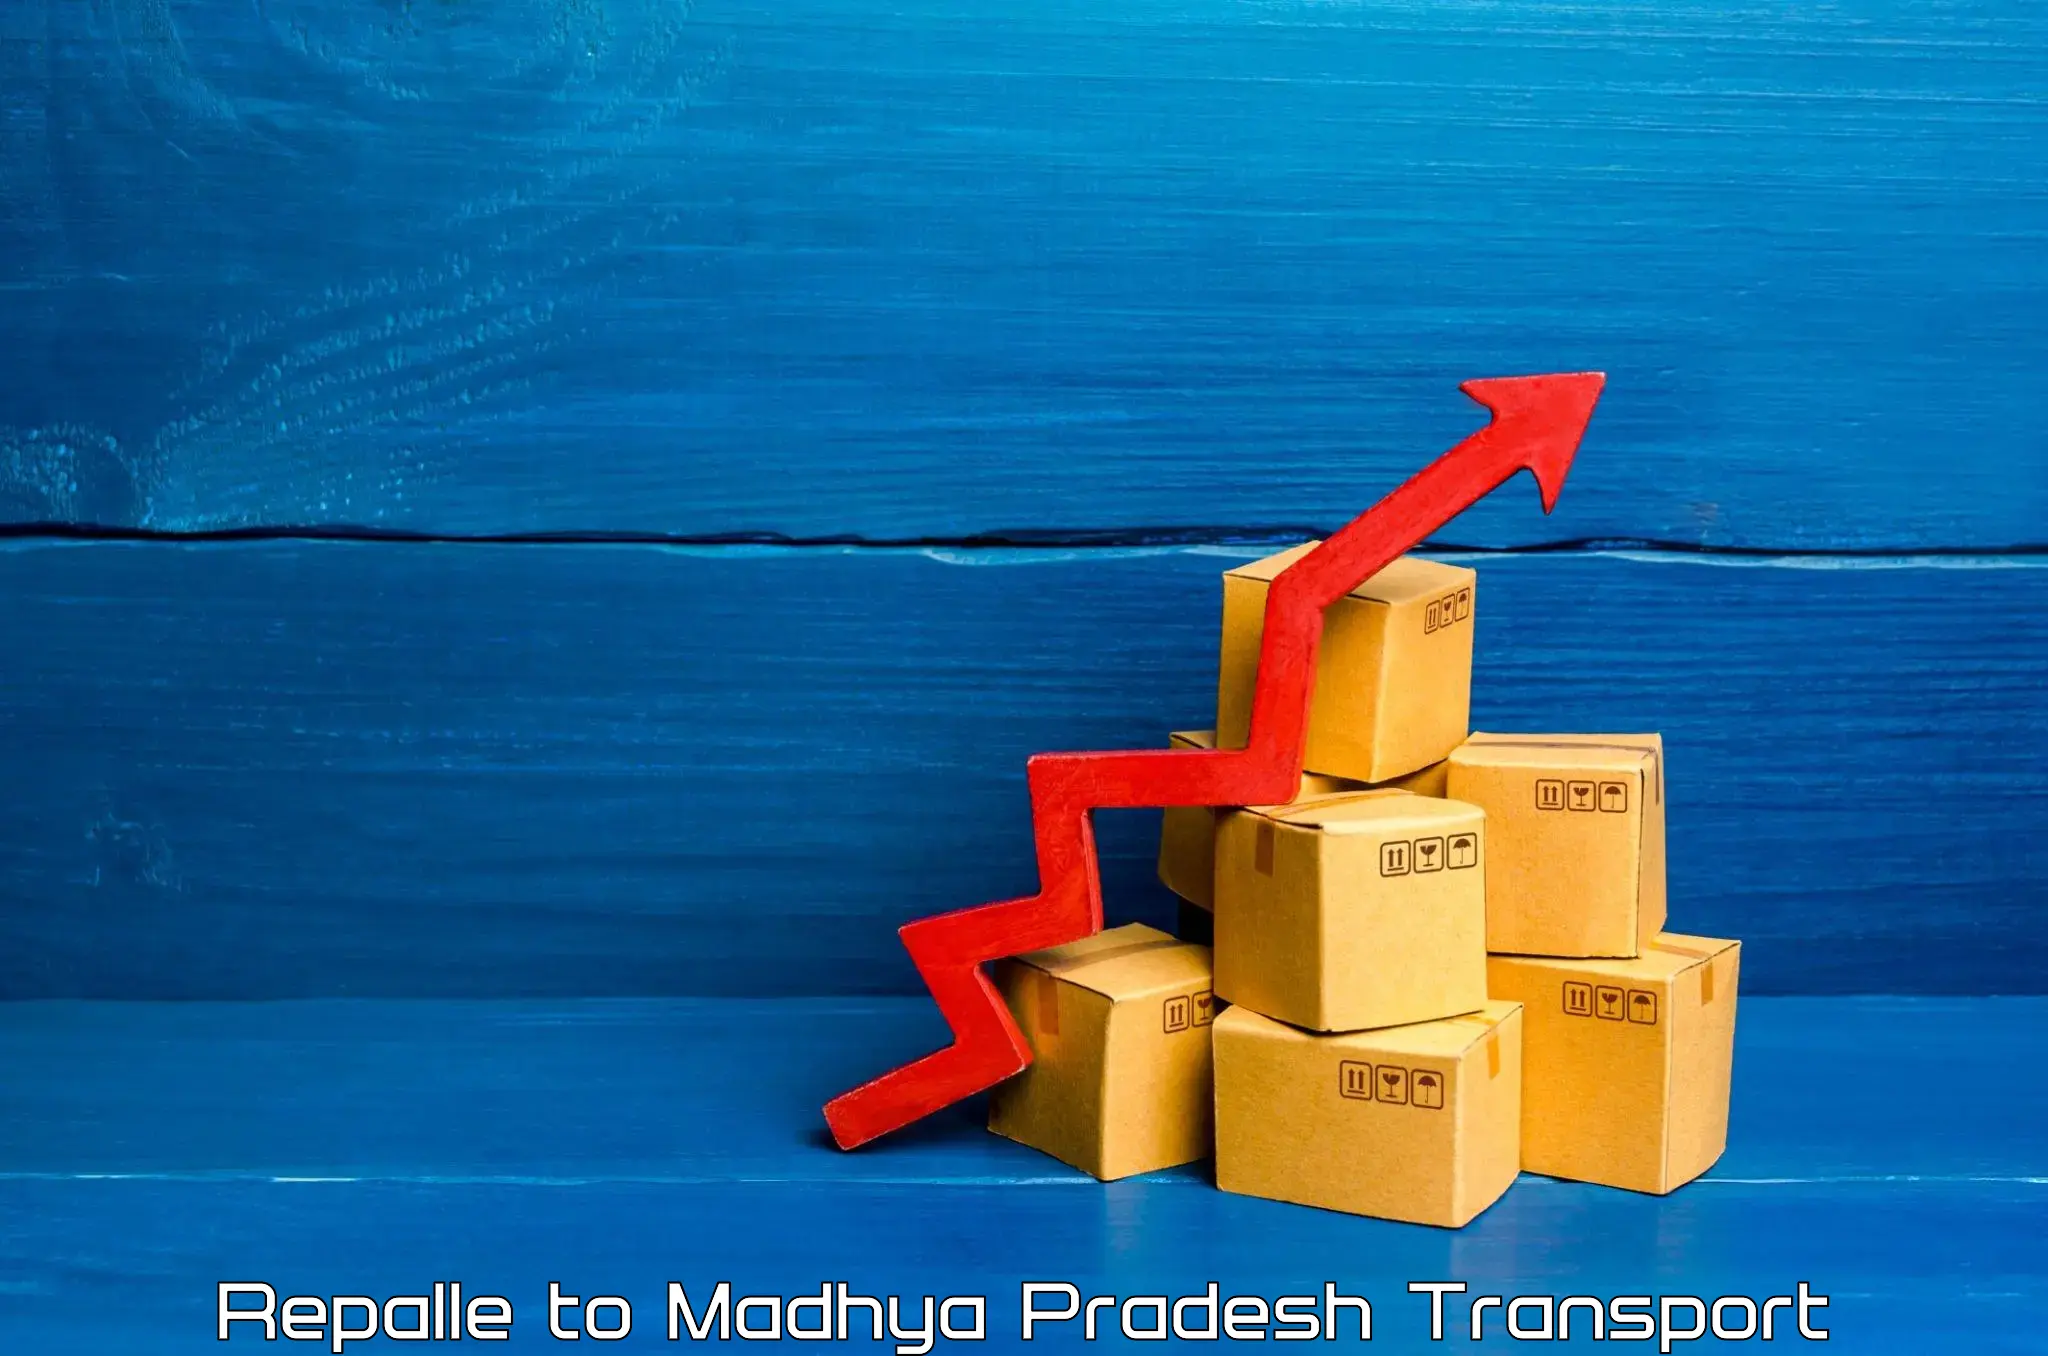 Nearest transport service Repalle to Madhya Pradesh